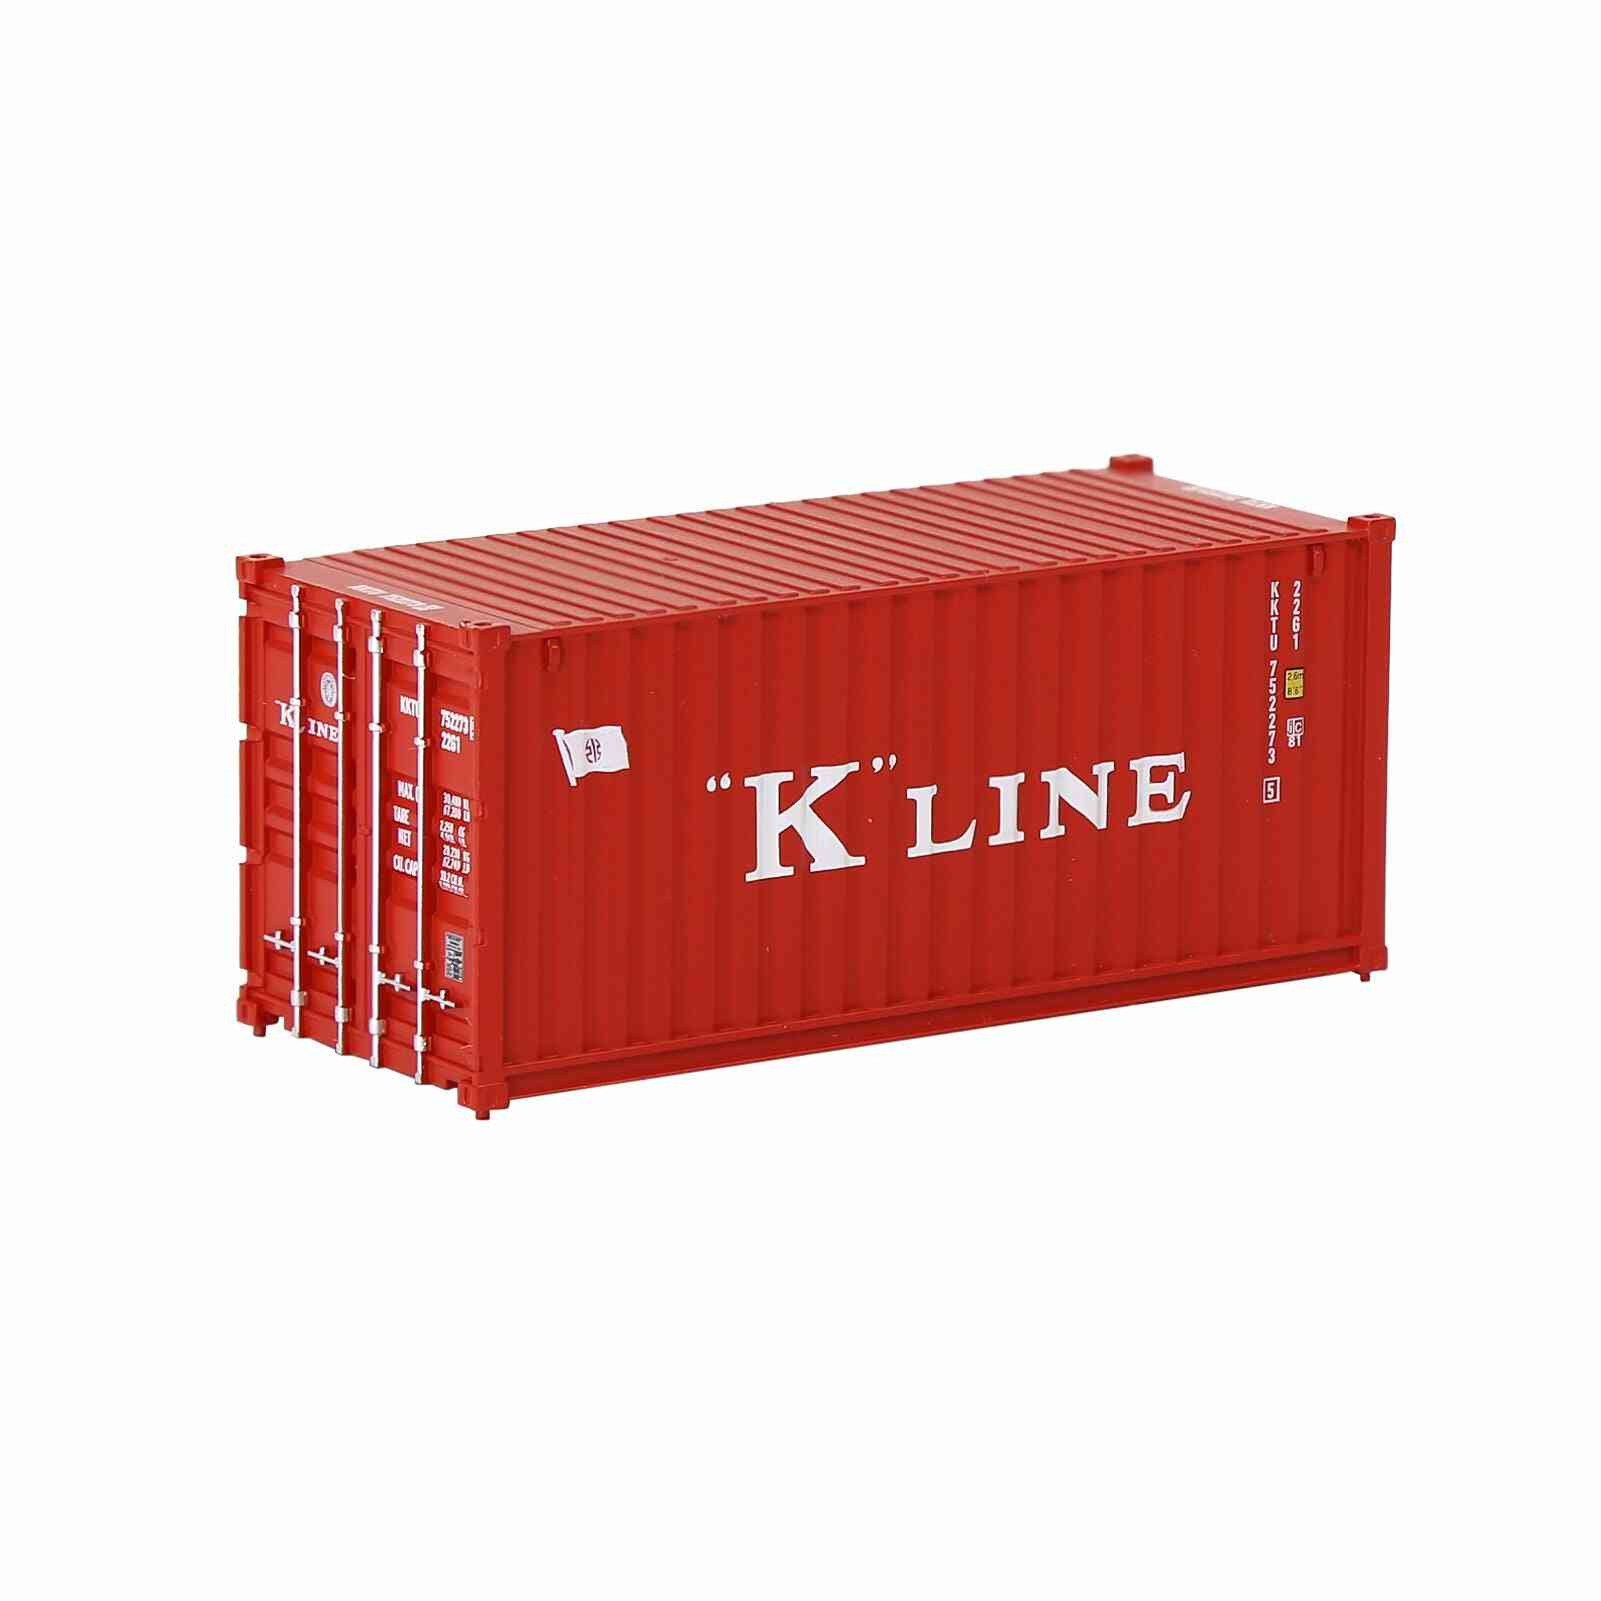 Container Model - Railway Cargo Box